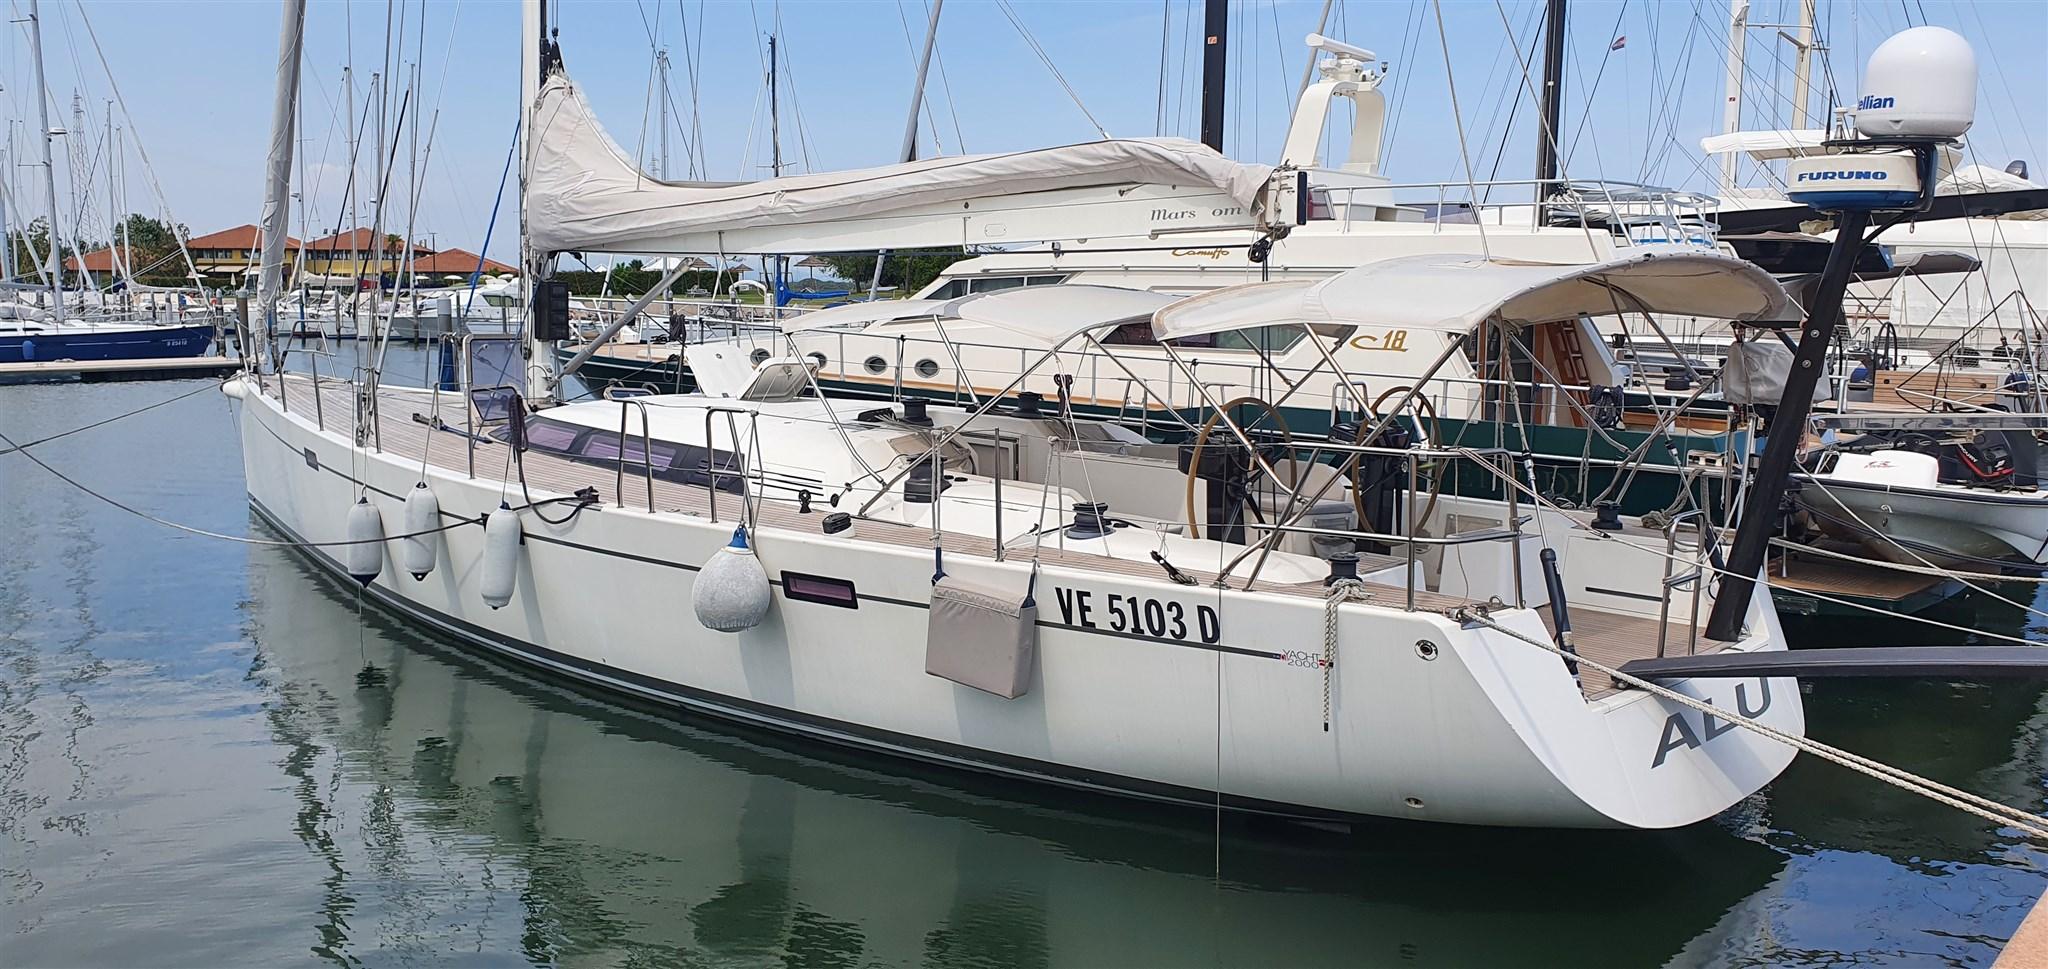 felci yacht for sale